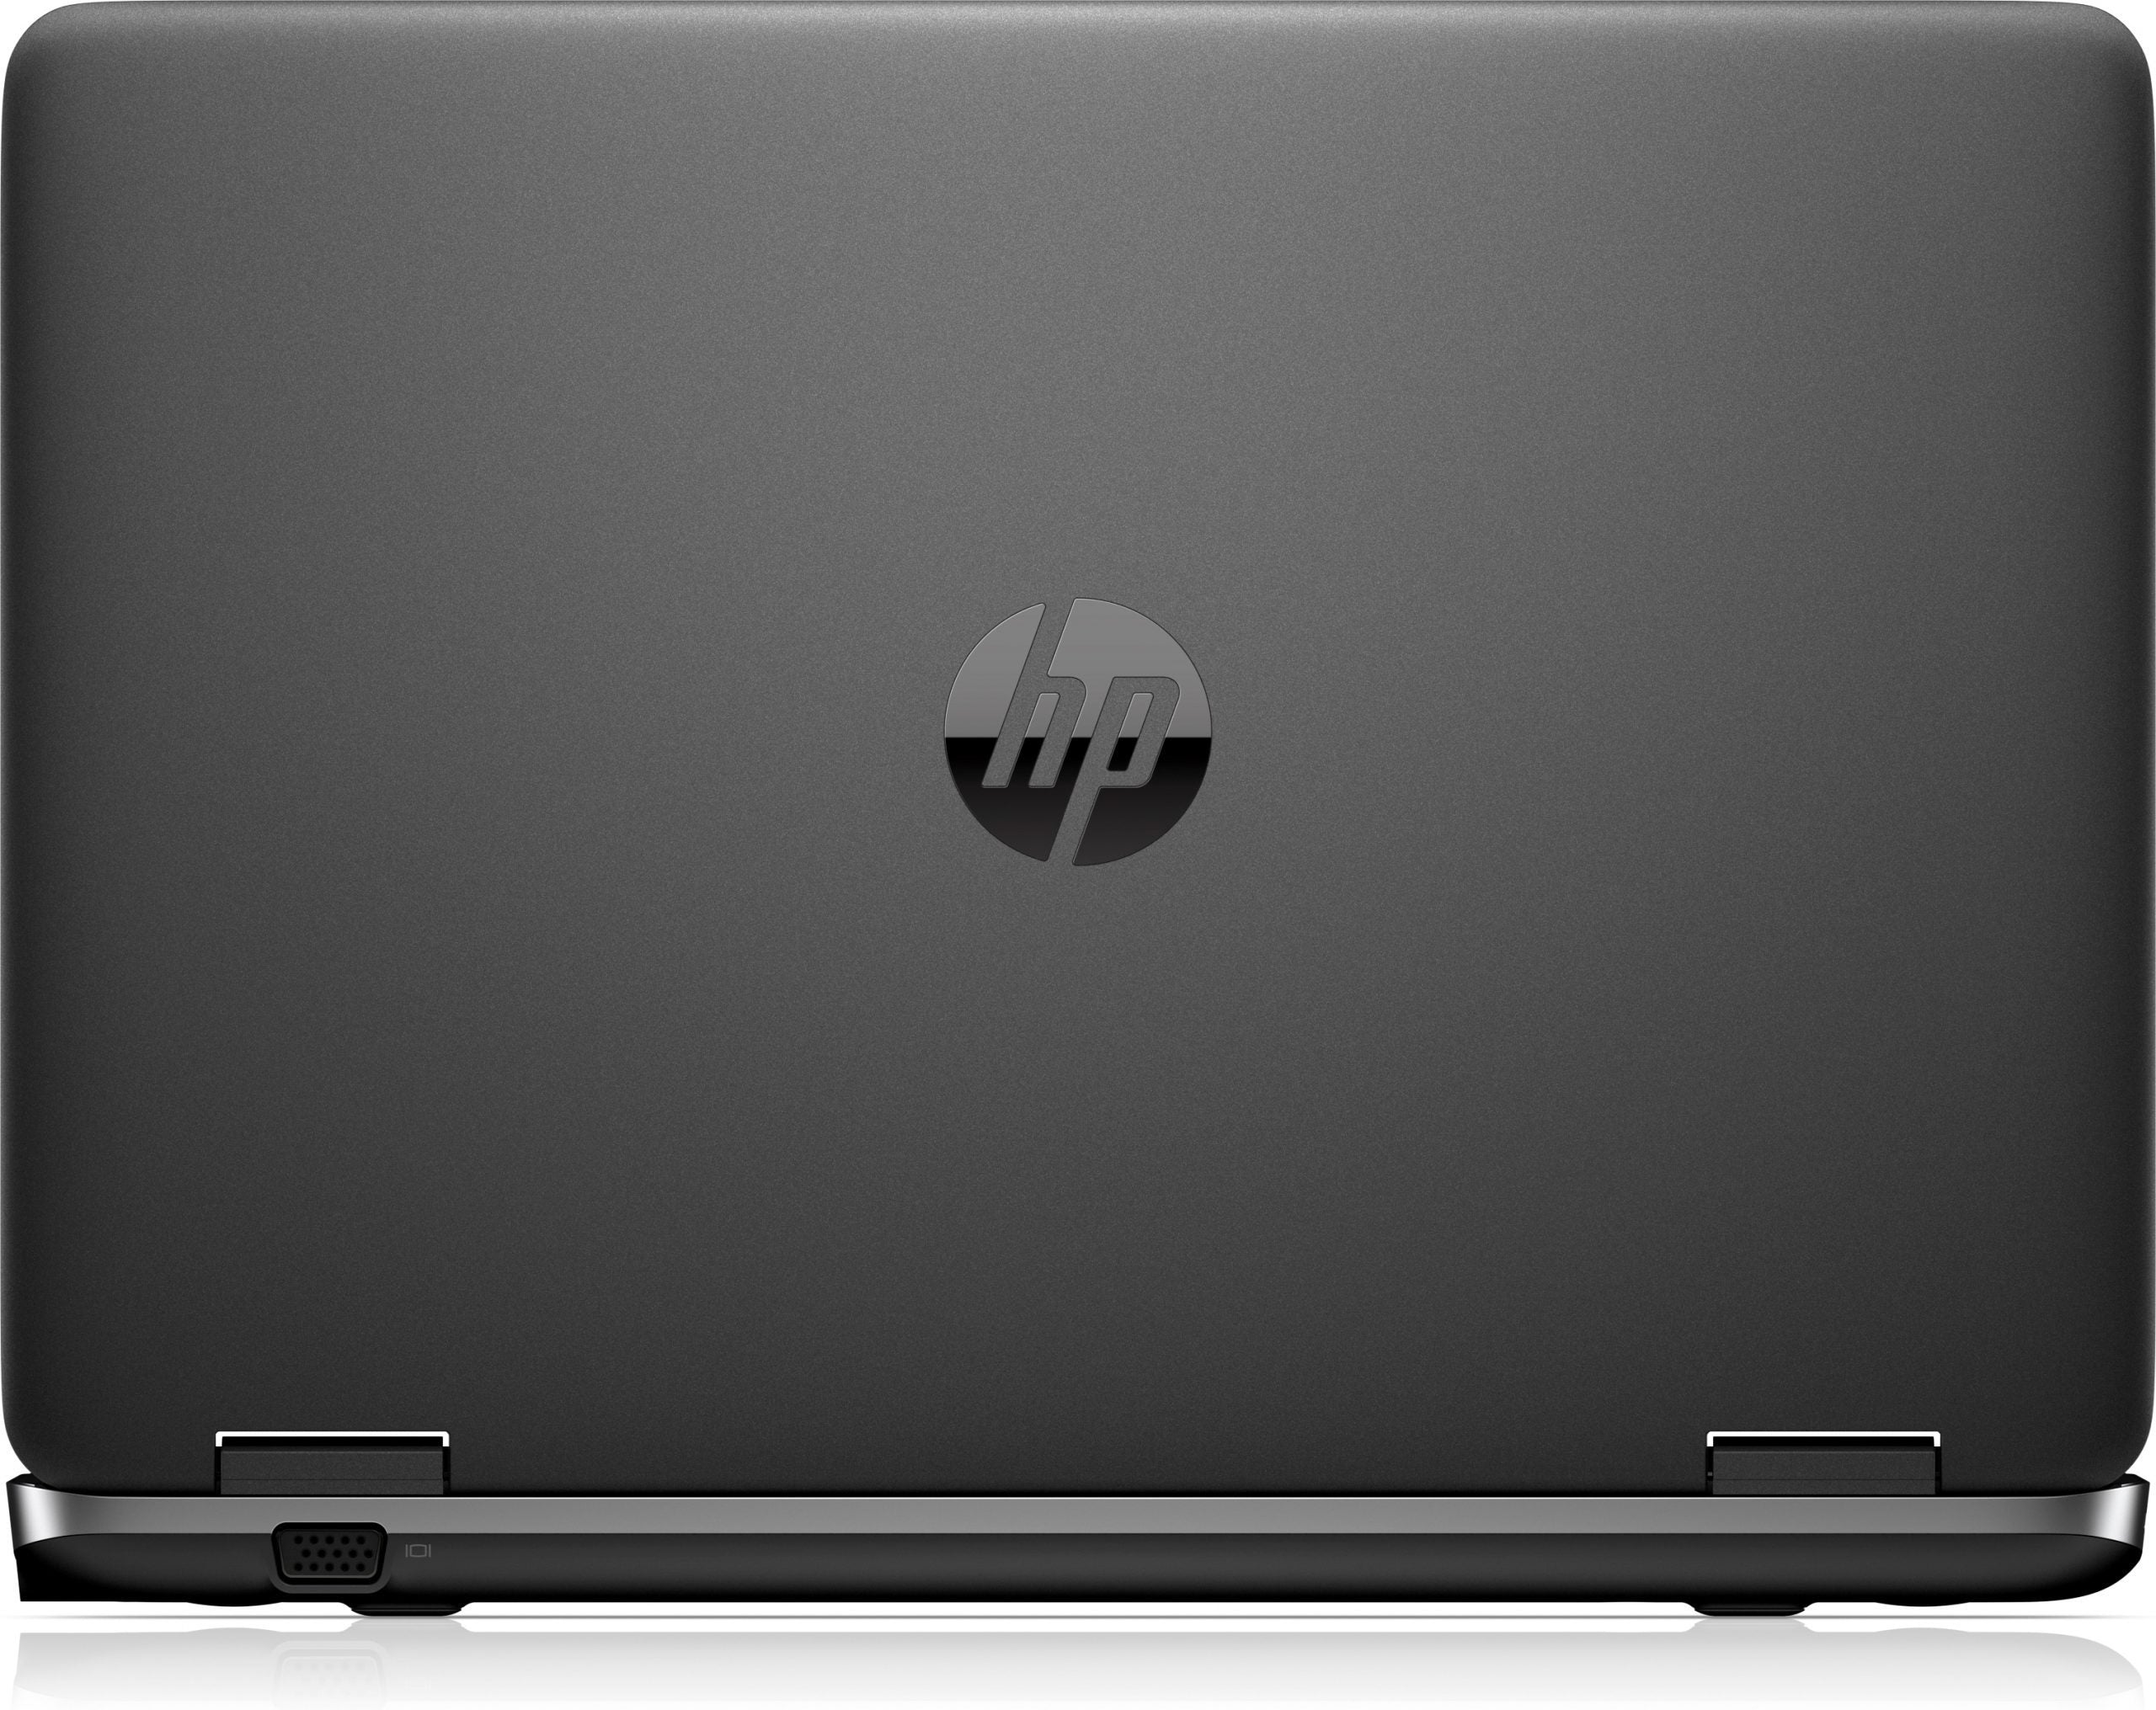 HP ProBook 645 G3 14″ HD Notebook | AMD A6-8530B 2.3Ghz | SSD 256Gb | Ram 8Gb | Webcam Keyboard ITA | HP D9Y32AA Docking Station and Free PC Bag | Windows 10 Pro